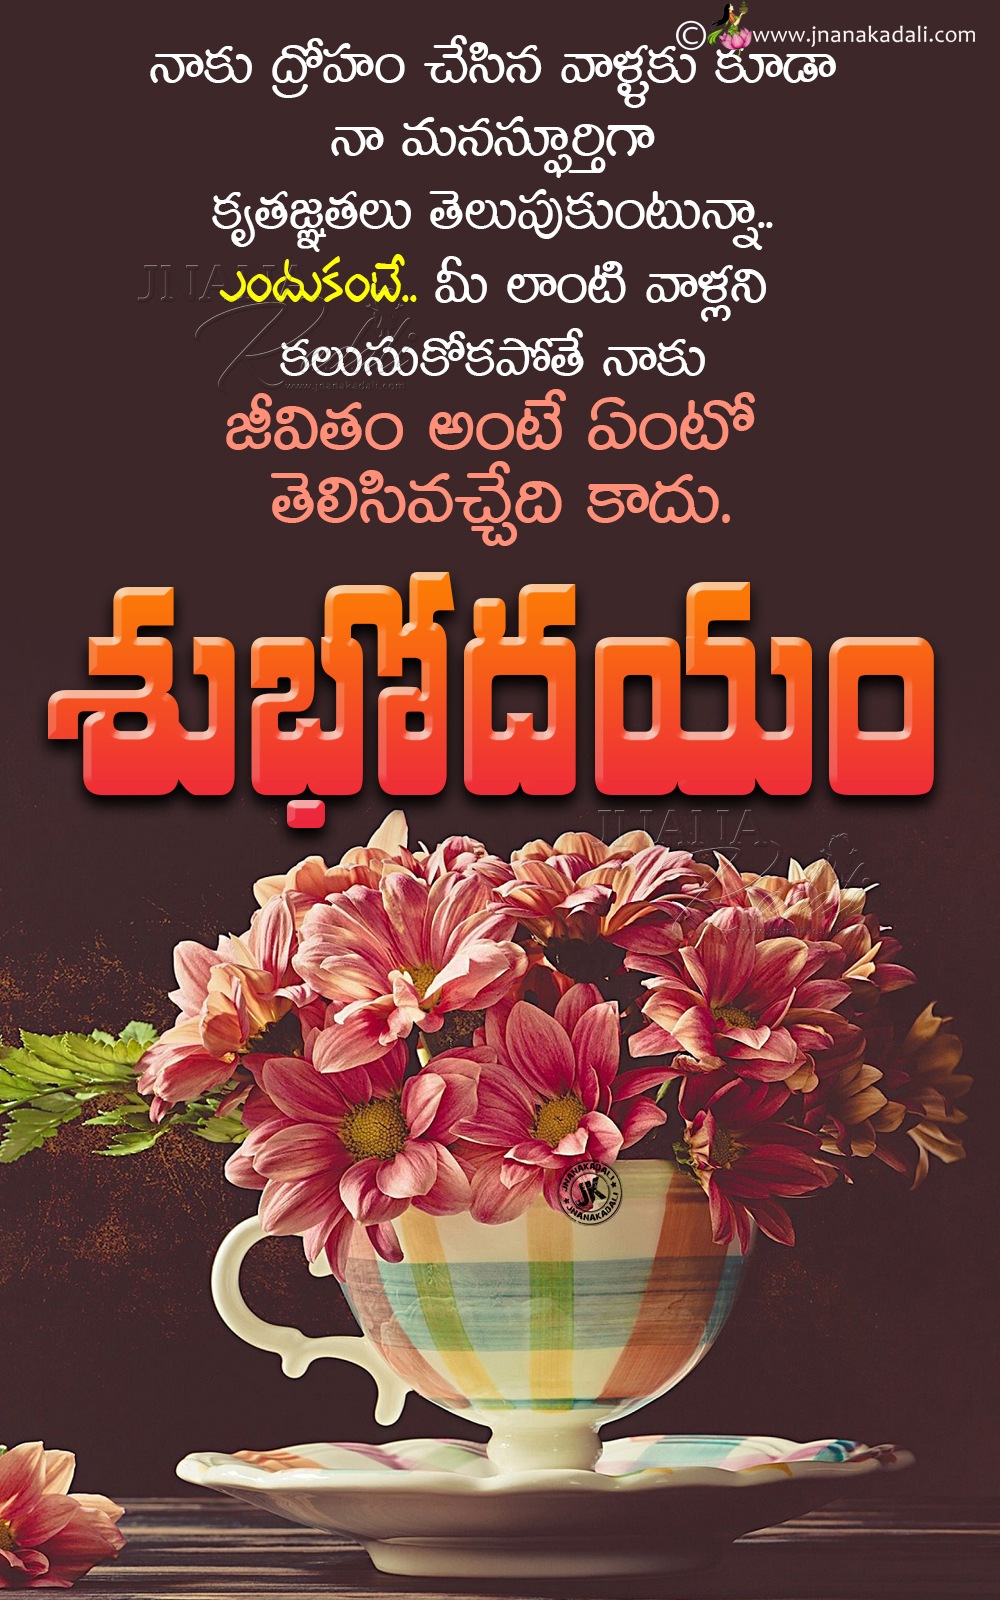 Telugu Good Morning messages-life changing words in Telugu | JNANA ...